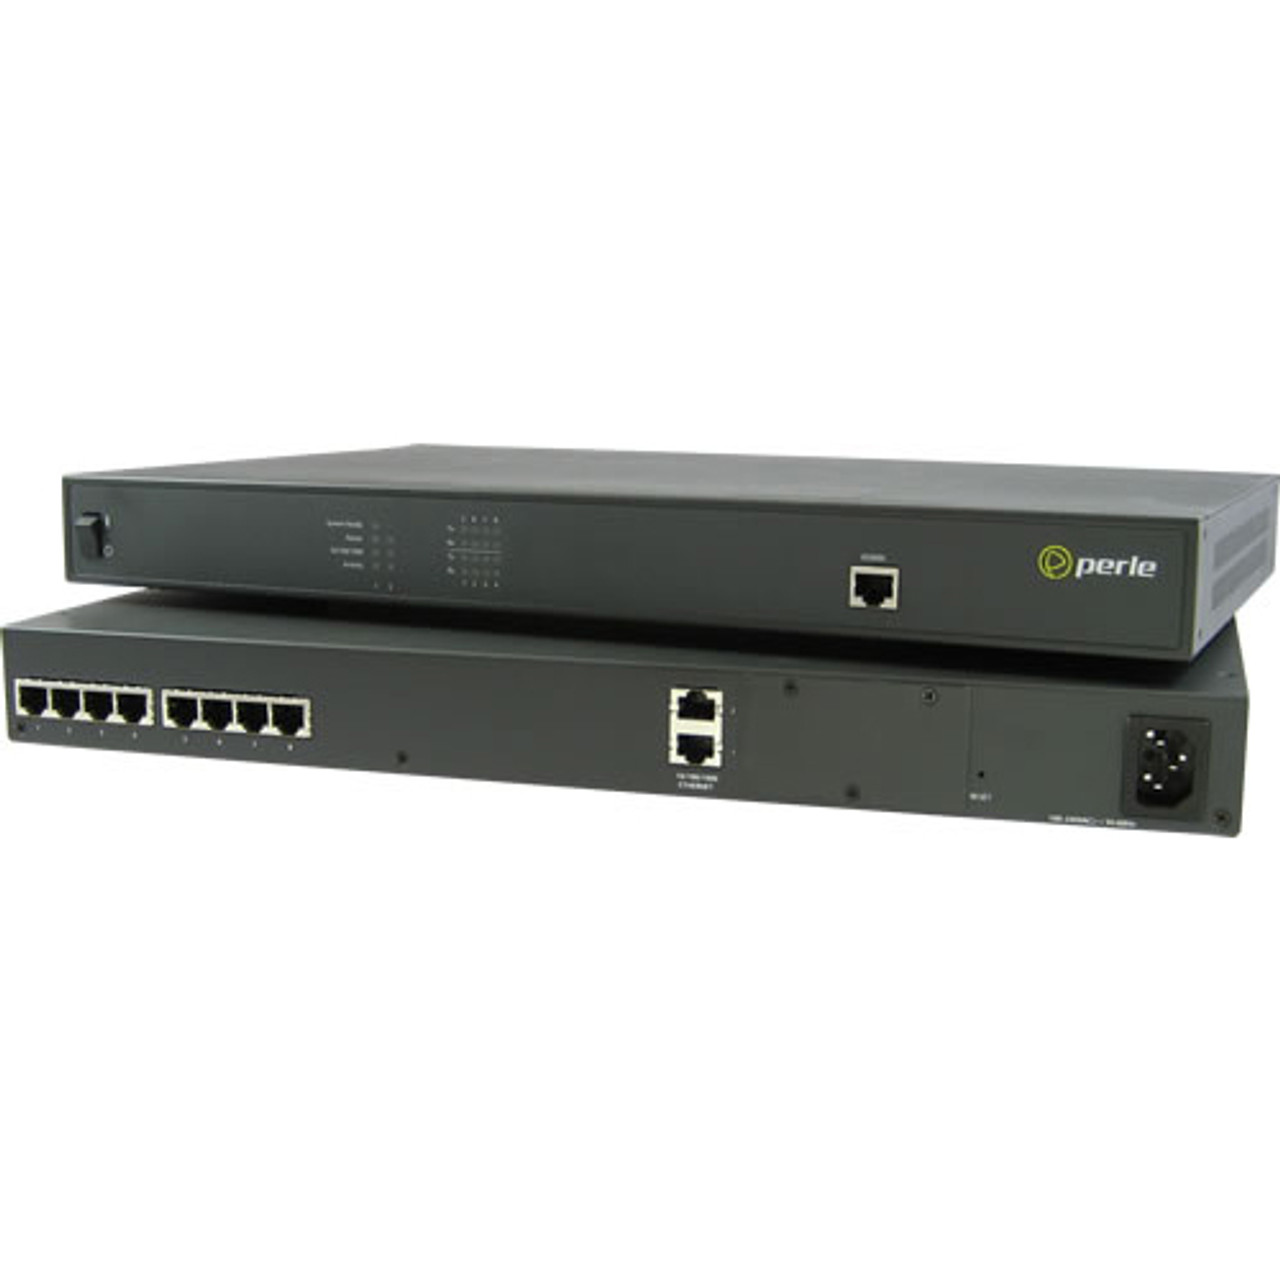 04031604 Perle Iolan Sds8c Terminal Server 8port Rs232/422/485 Dual Gbe Ac